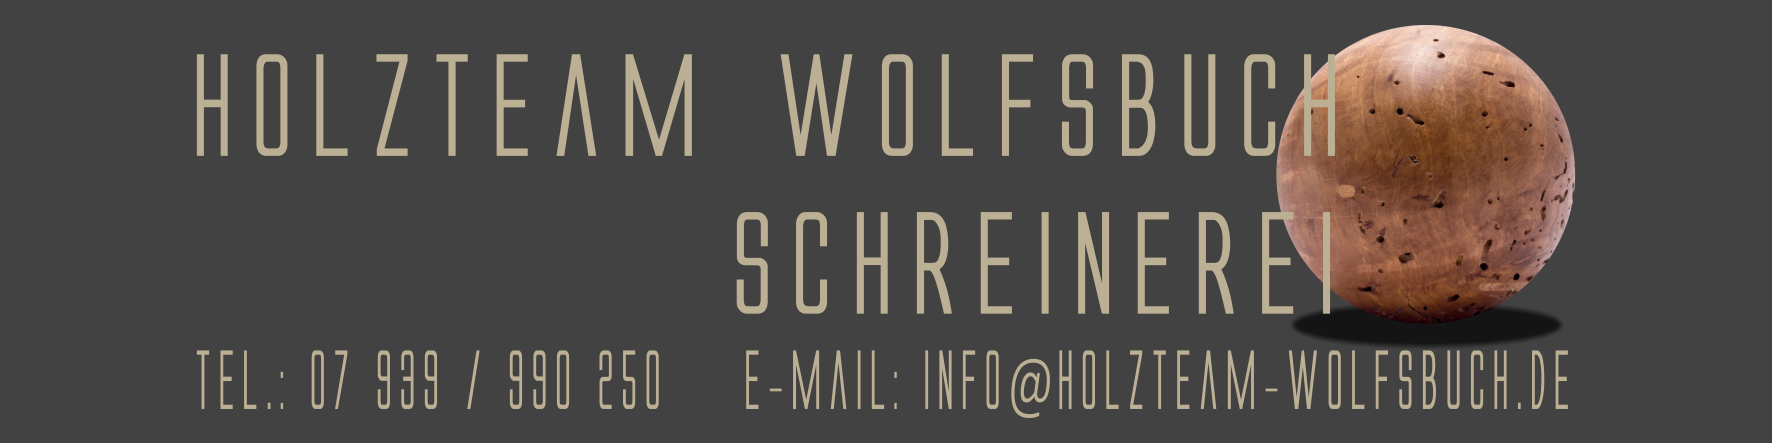 (c) Holzteam-wolfsbuch.de